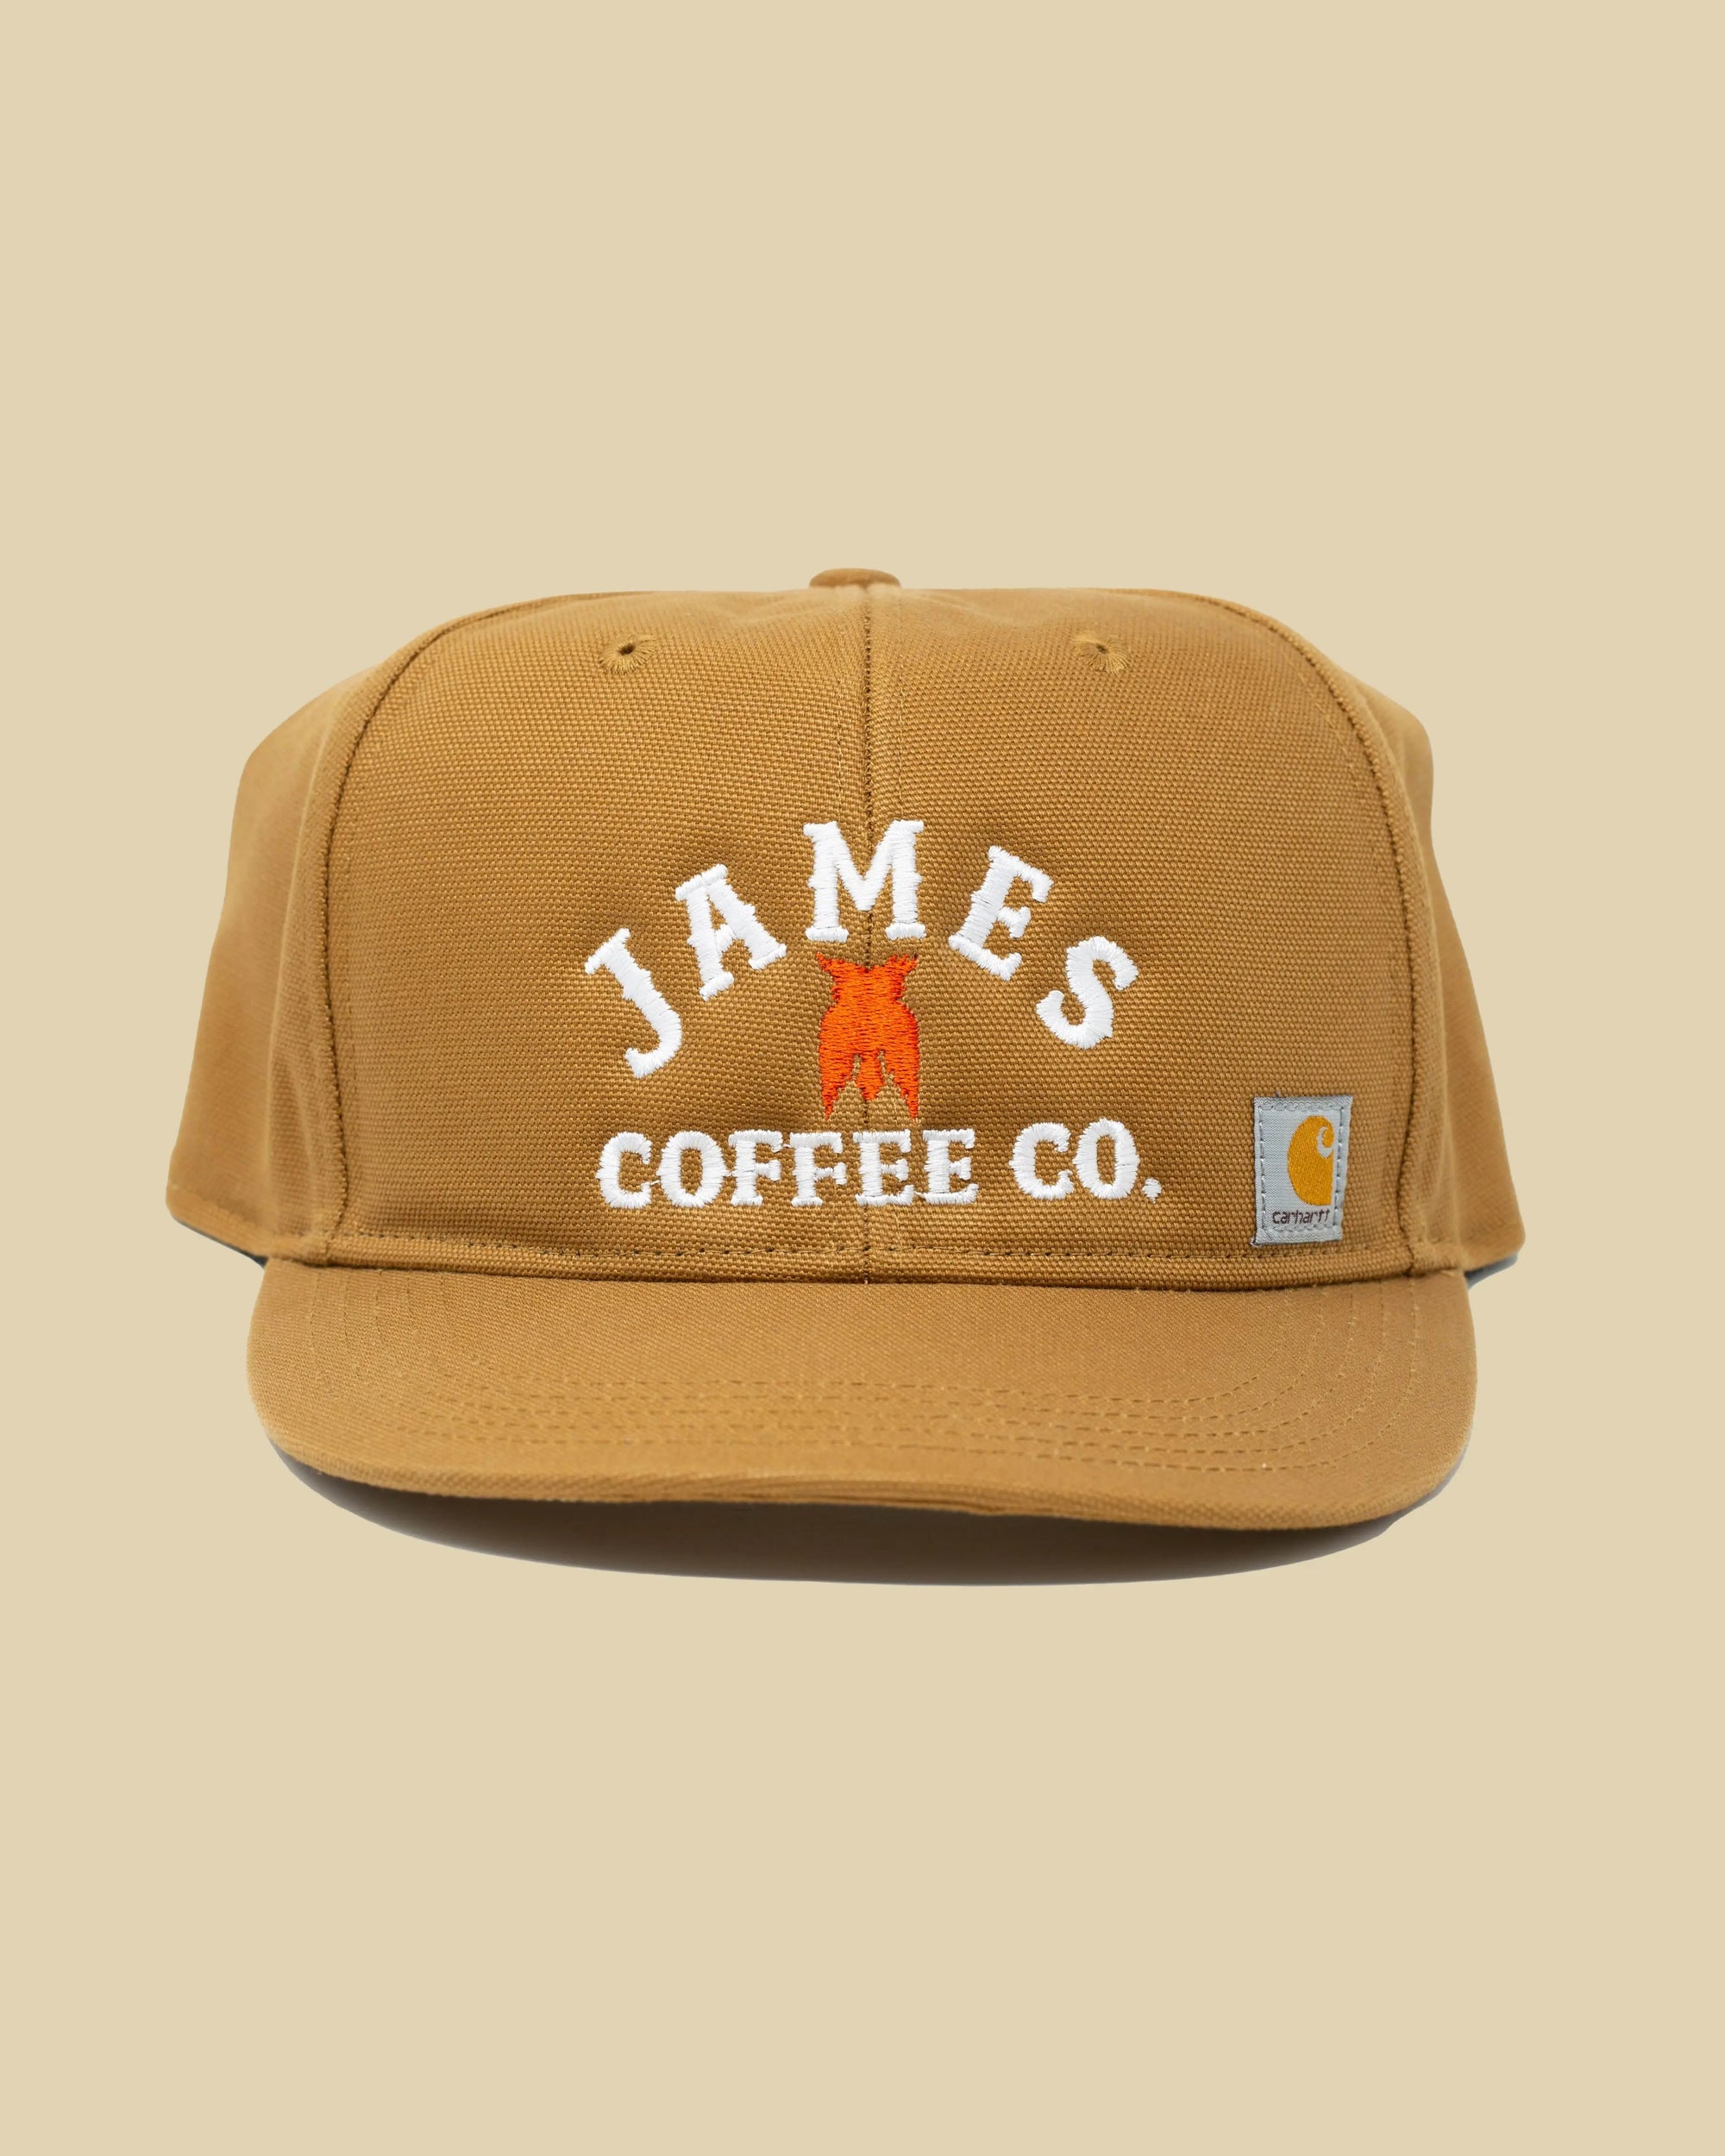 Smart Scale II - James Coffee Co.